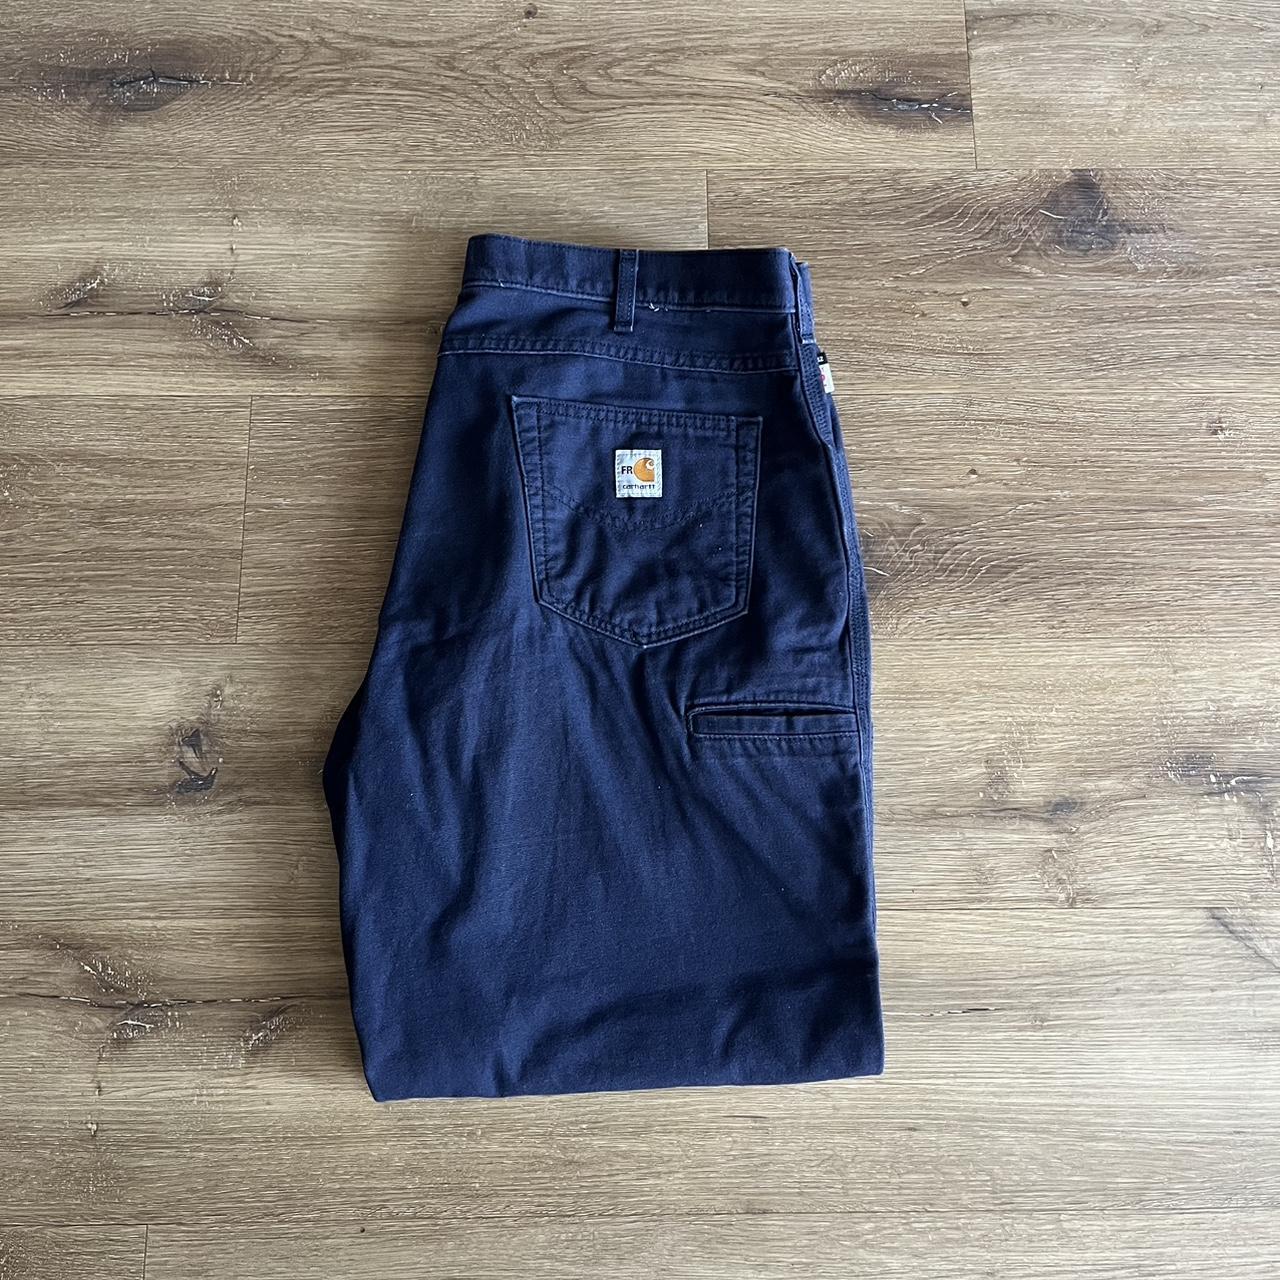 navy blue fire resistant carhartt pants, size 38 x